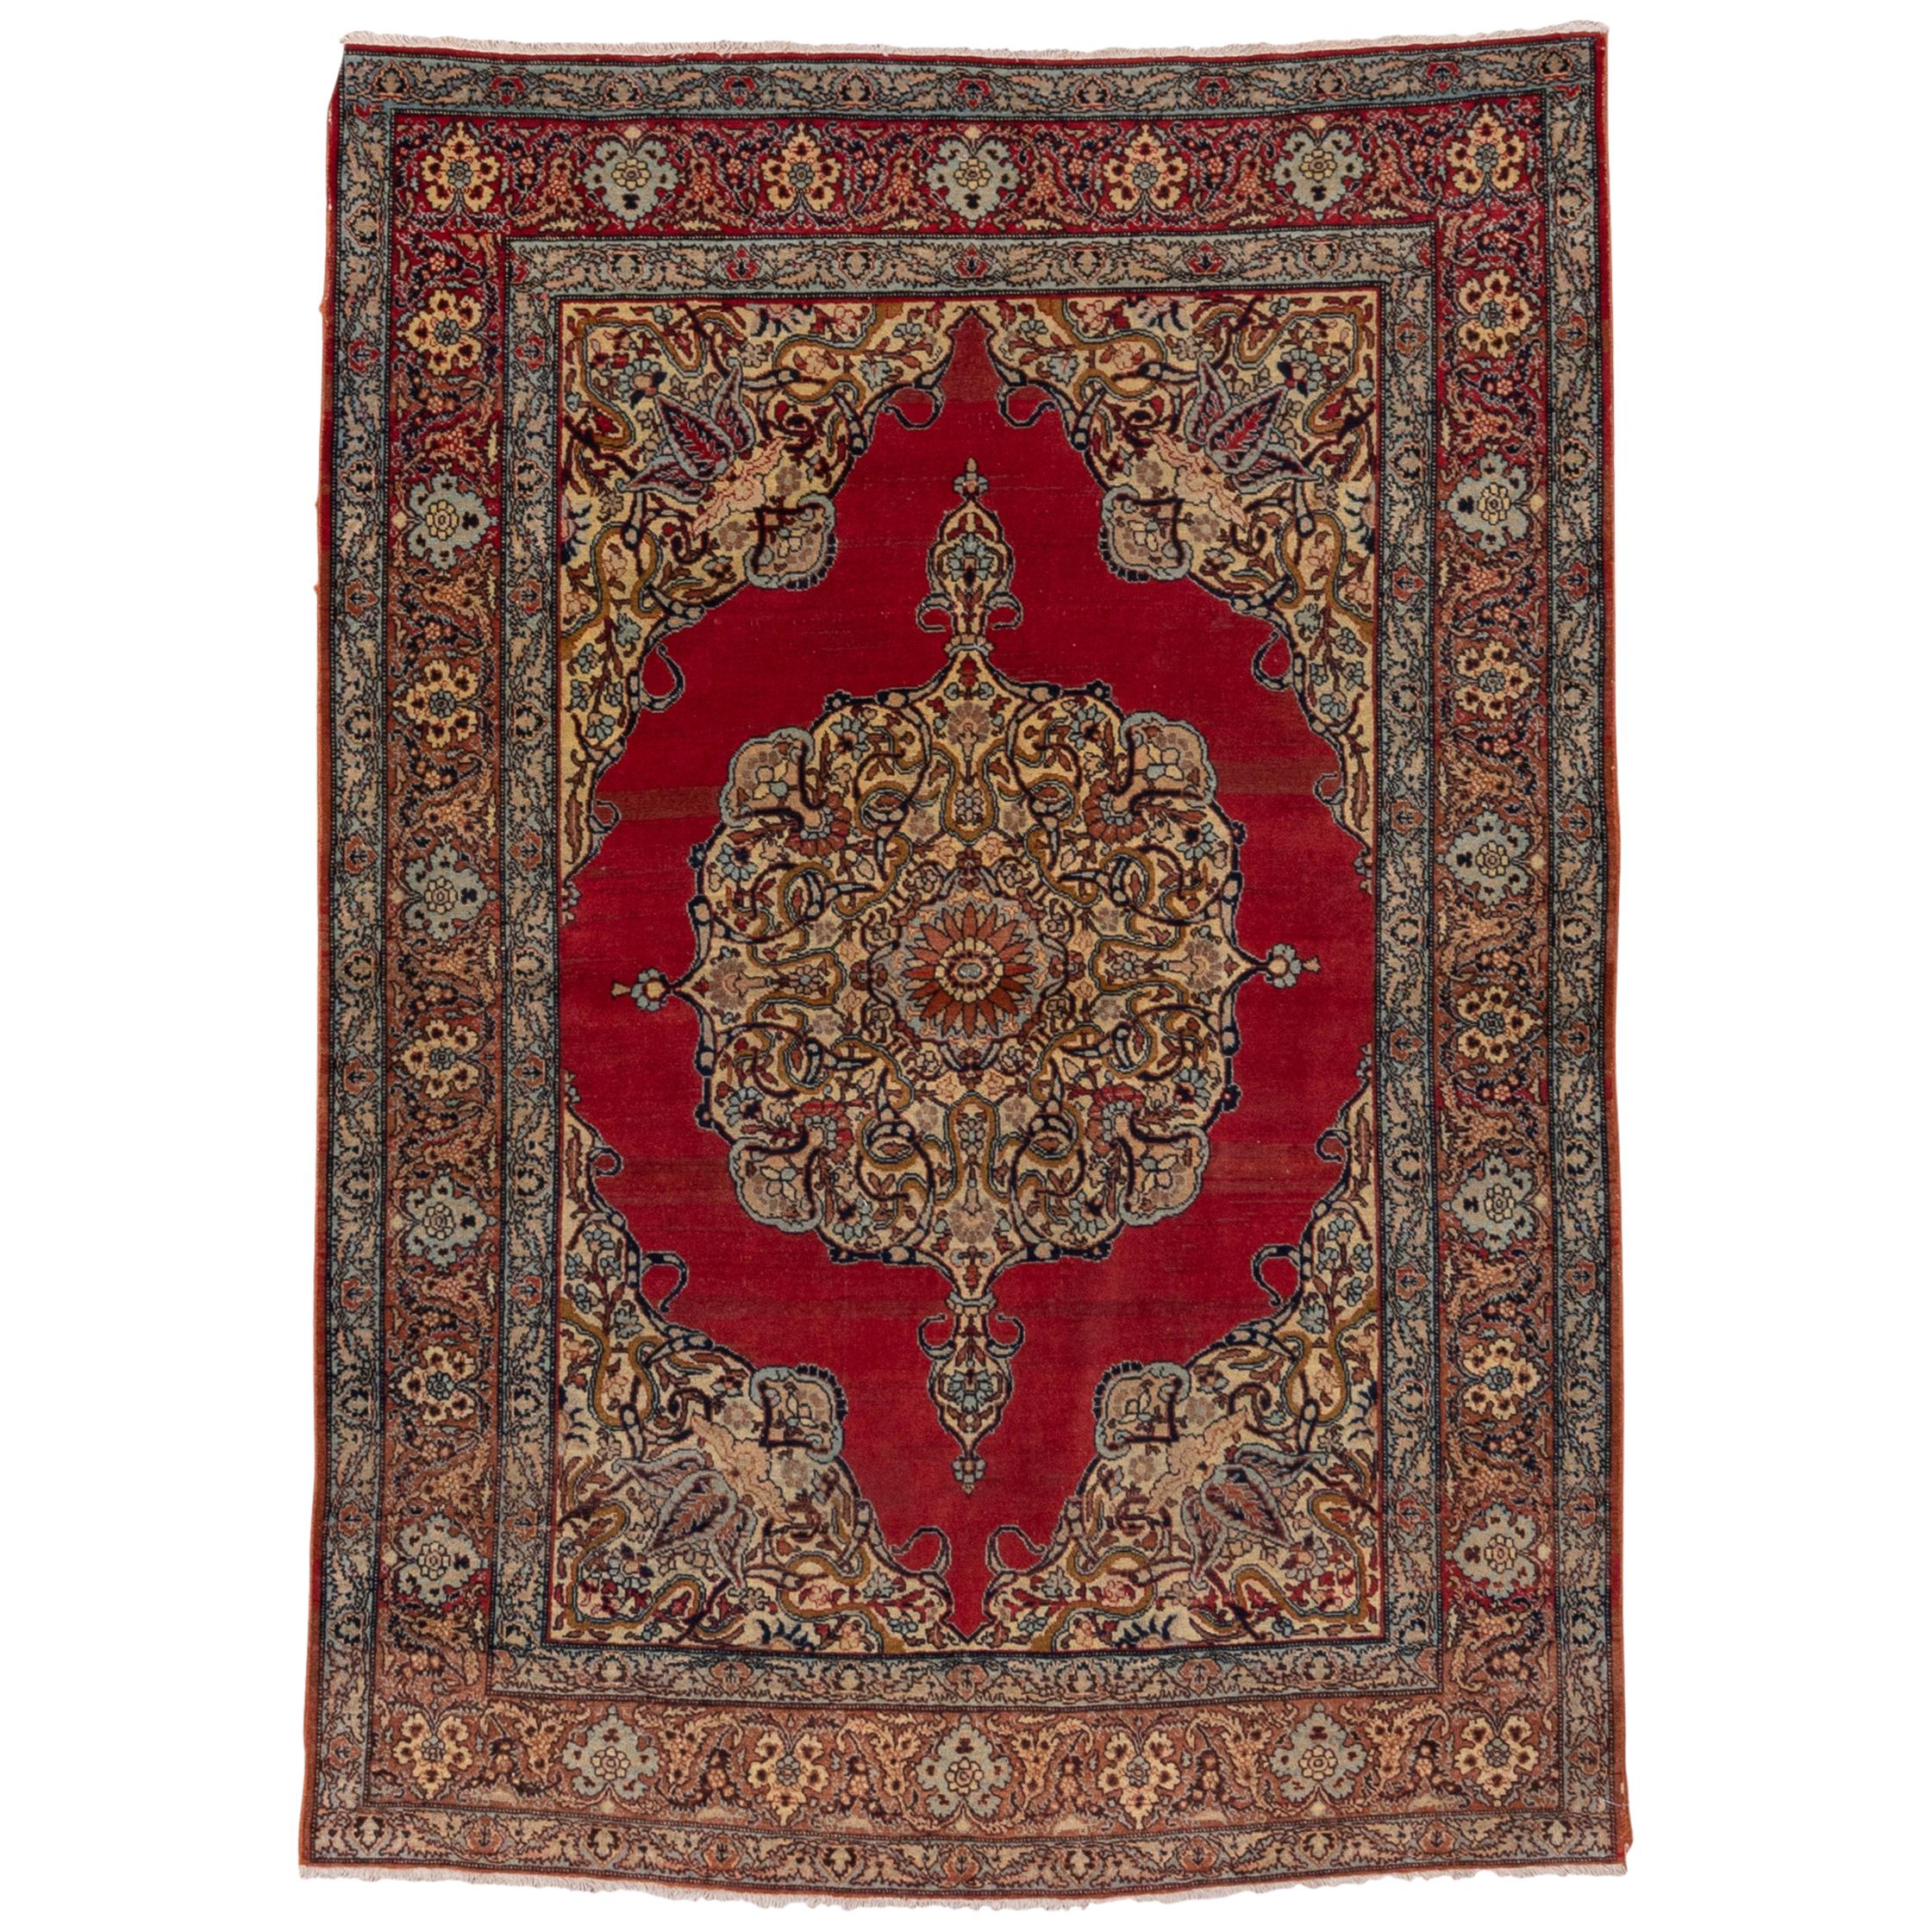 Antiker persischer Täbriz-Teppich, rotes Feld, Korallenbordüren, mittlerer Flor